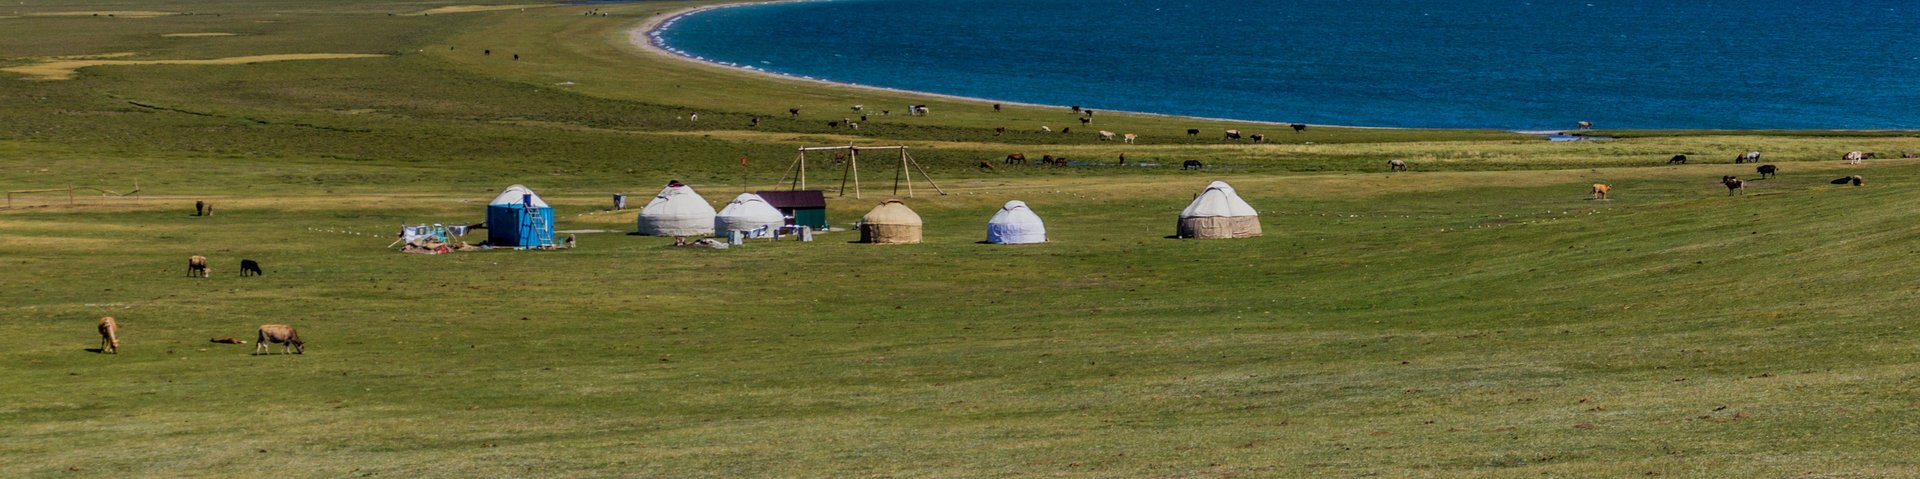 Jurtensiedlung am See Son Köl in Kirgistan